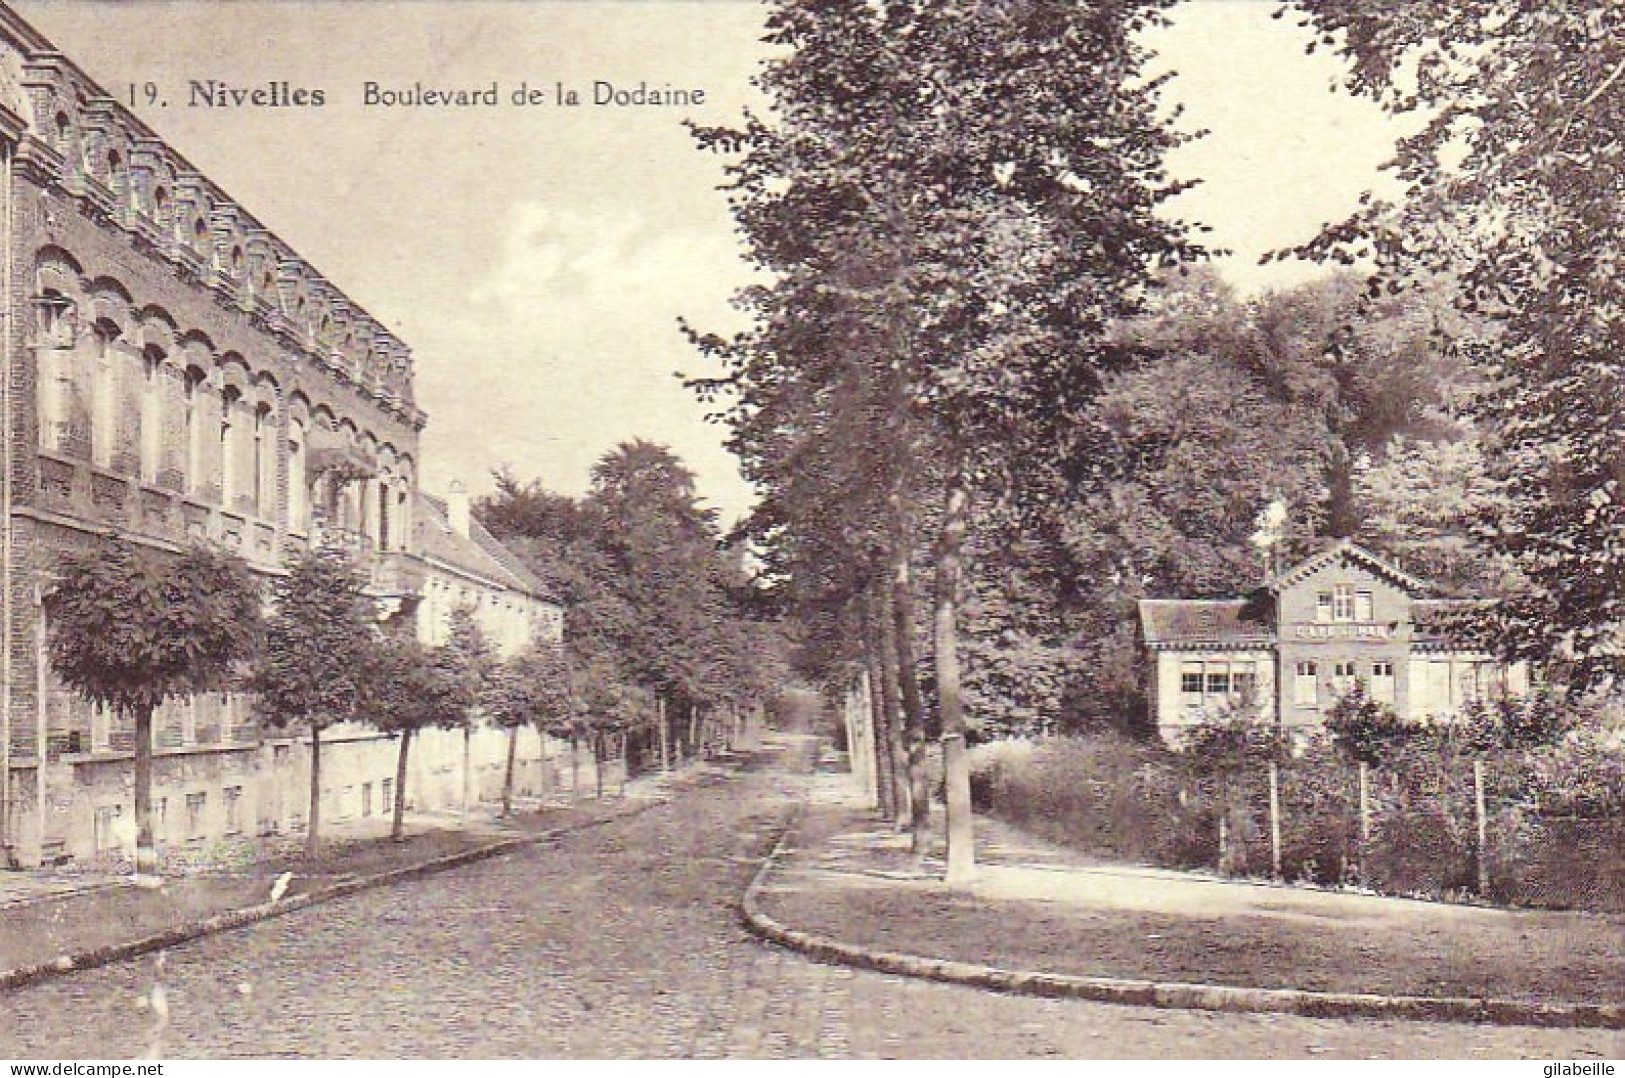 NIVELLES - Boulevard De La Dodaine - Nijvel